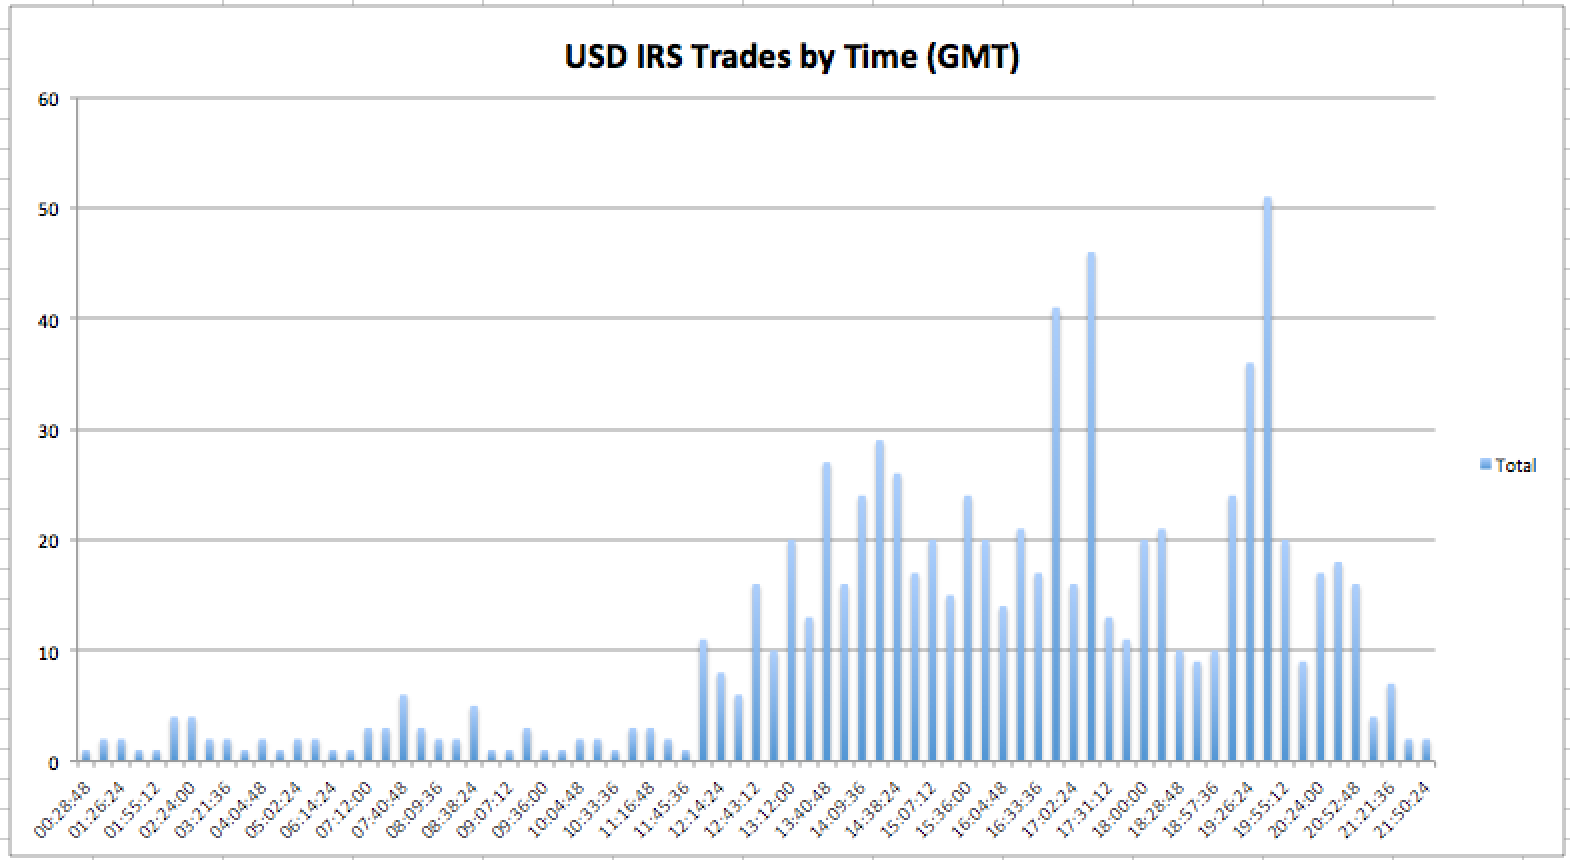 USD IRS Trade Timings